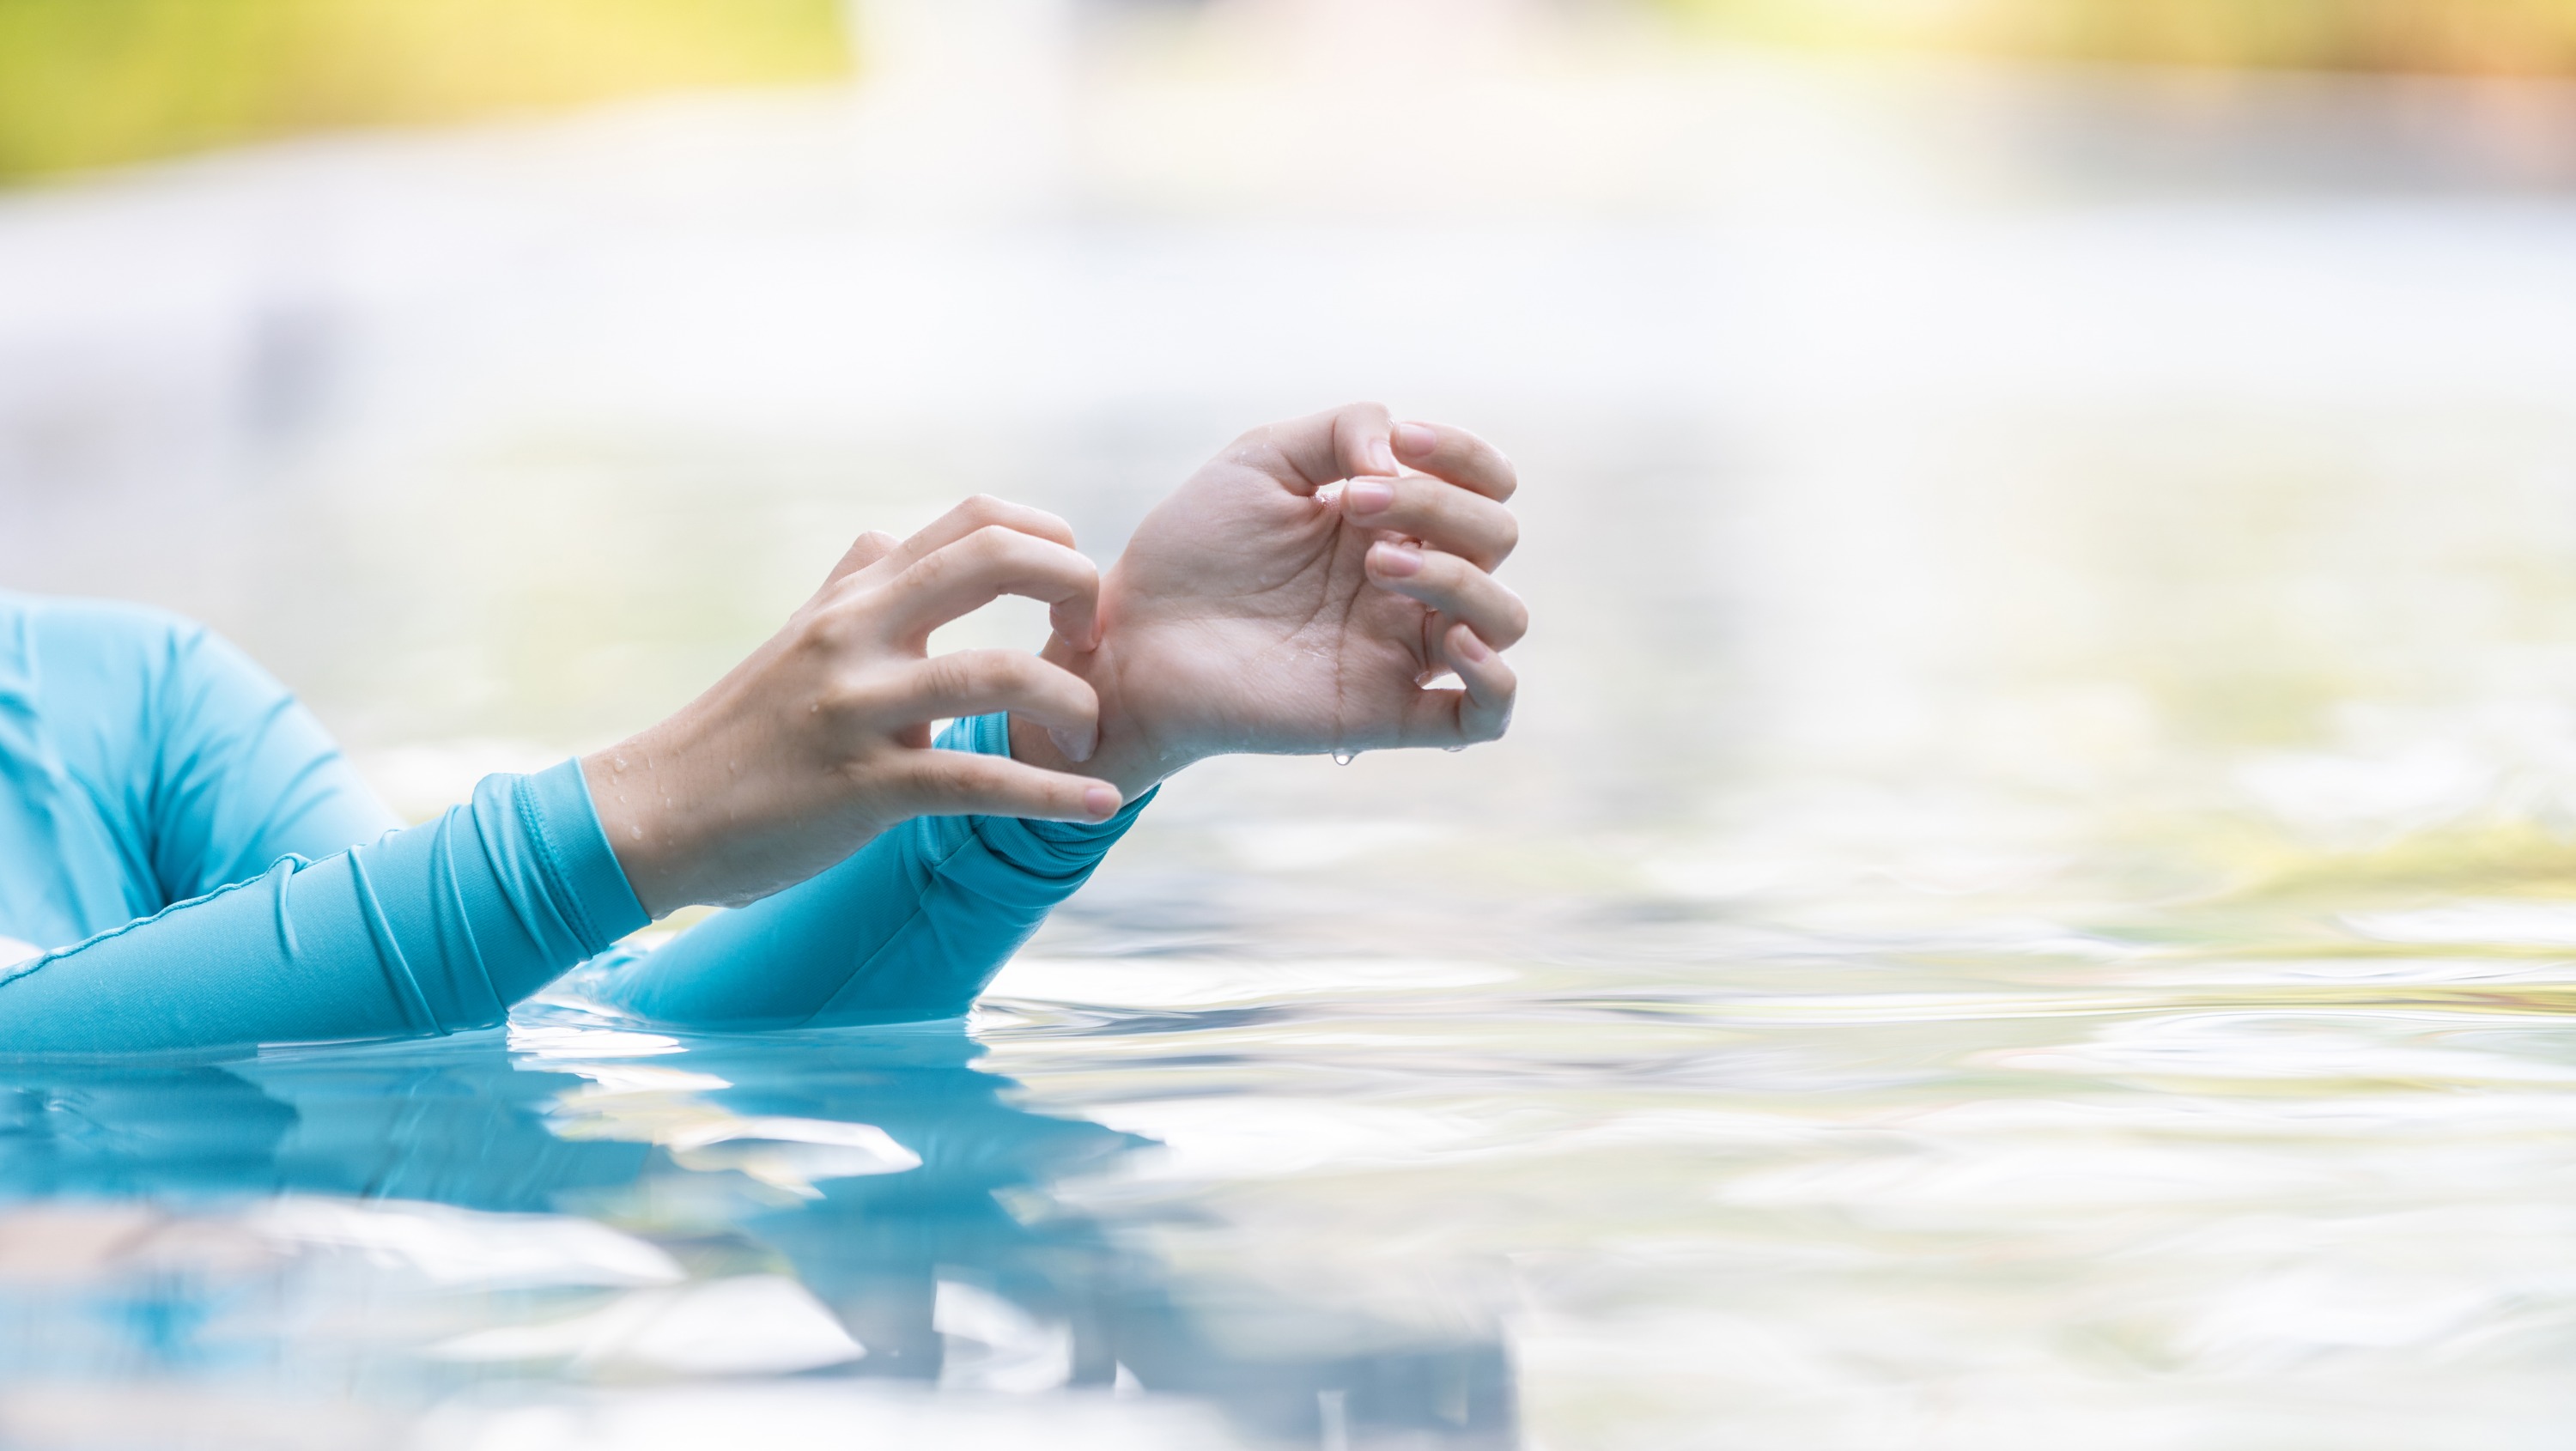 Chlorine Rash Symptoms, Causes, and Prevention New Wave Swim Buoy